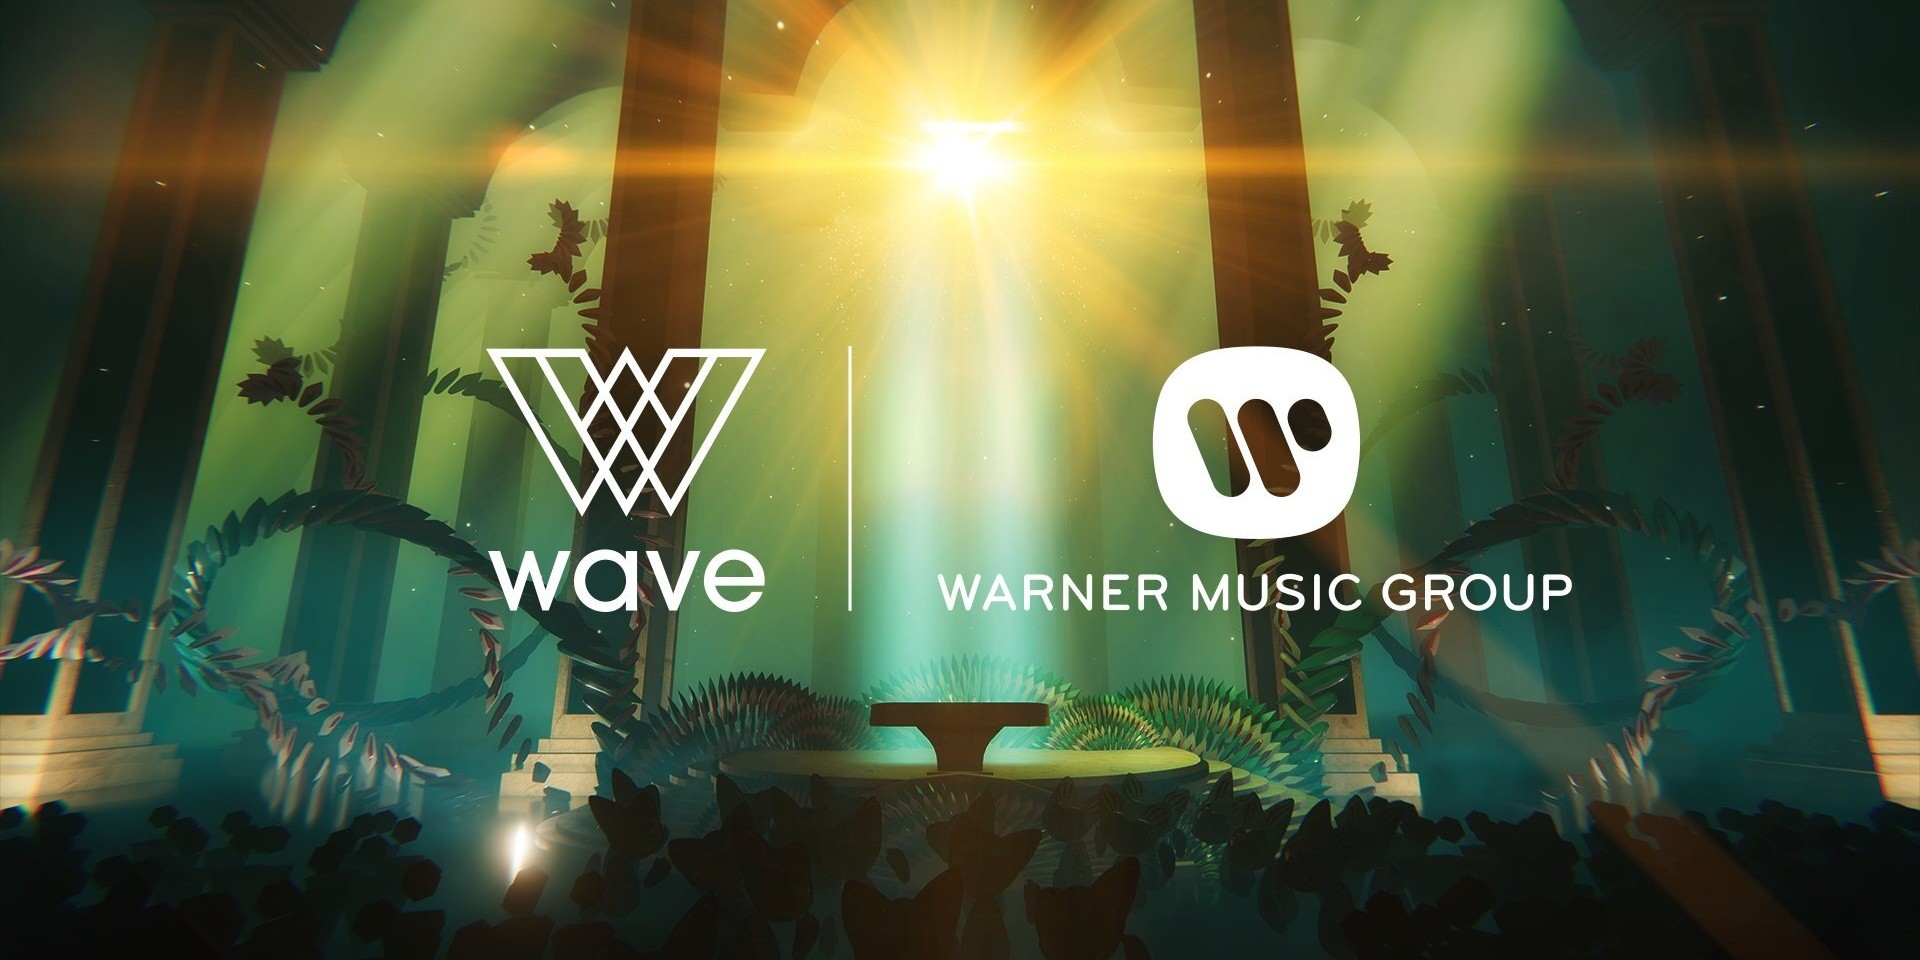 Warner Music Group strikes up partnership with virtual entertainment platform Wave